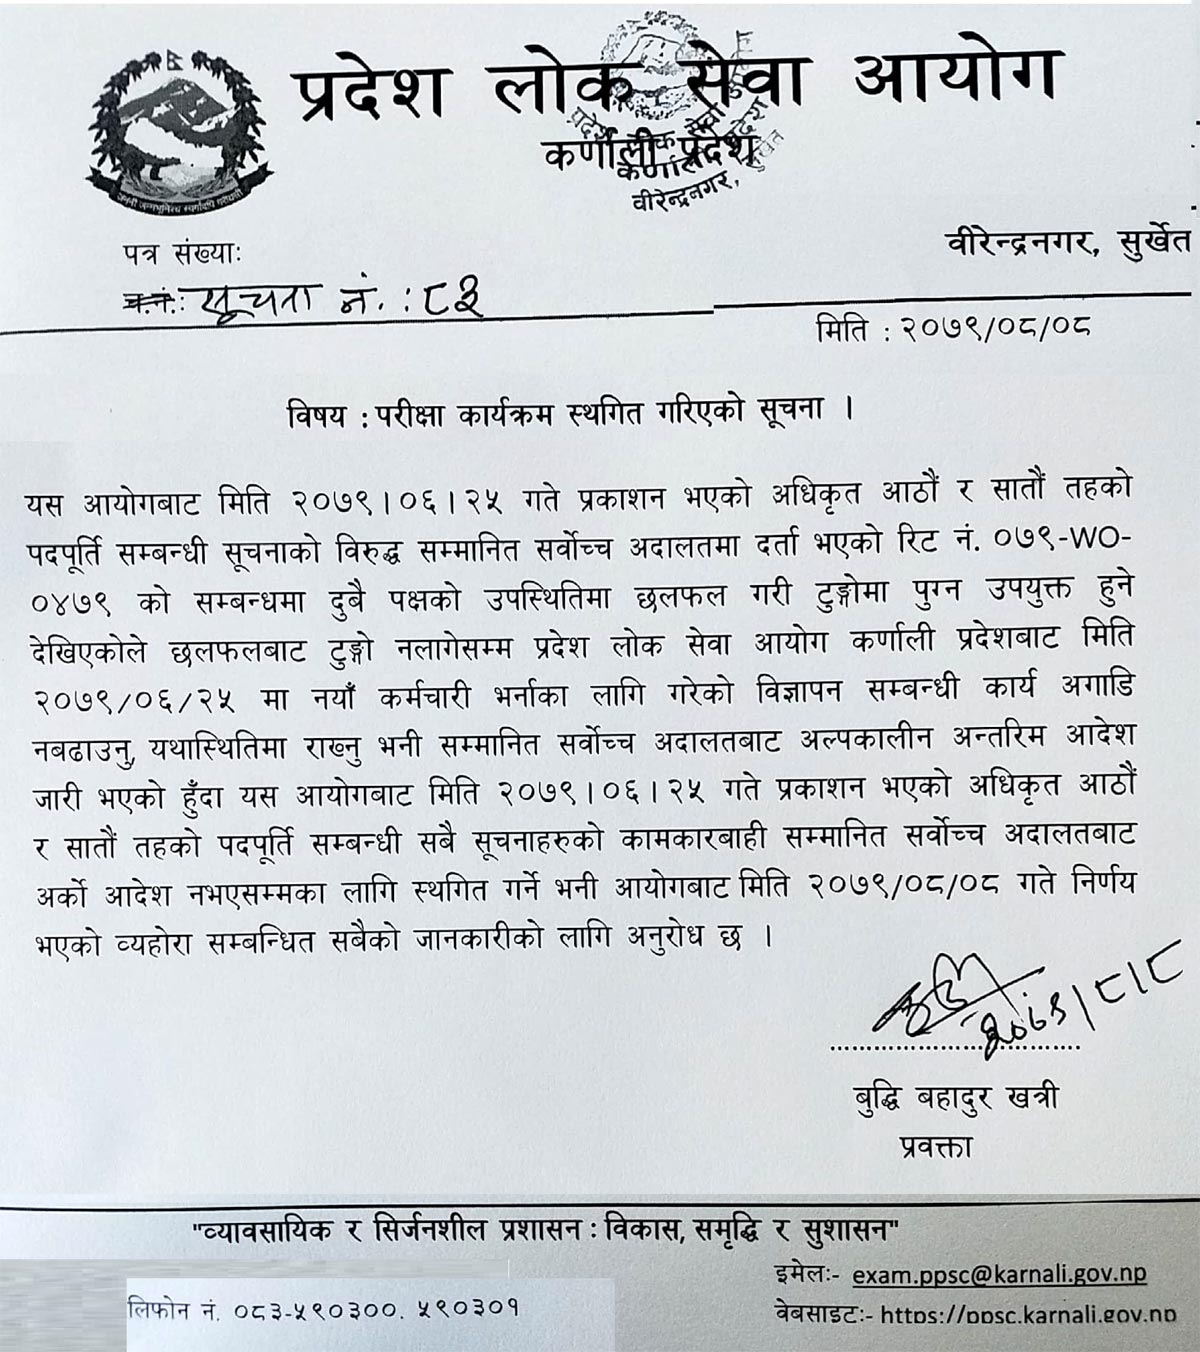 Karnali Pradesh Lok Sewa Aayog Notice exam postponed